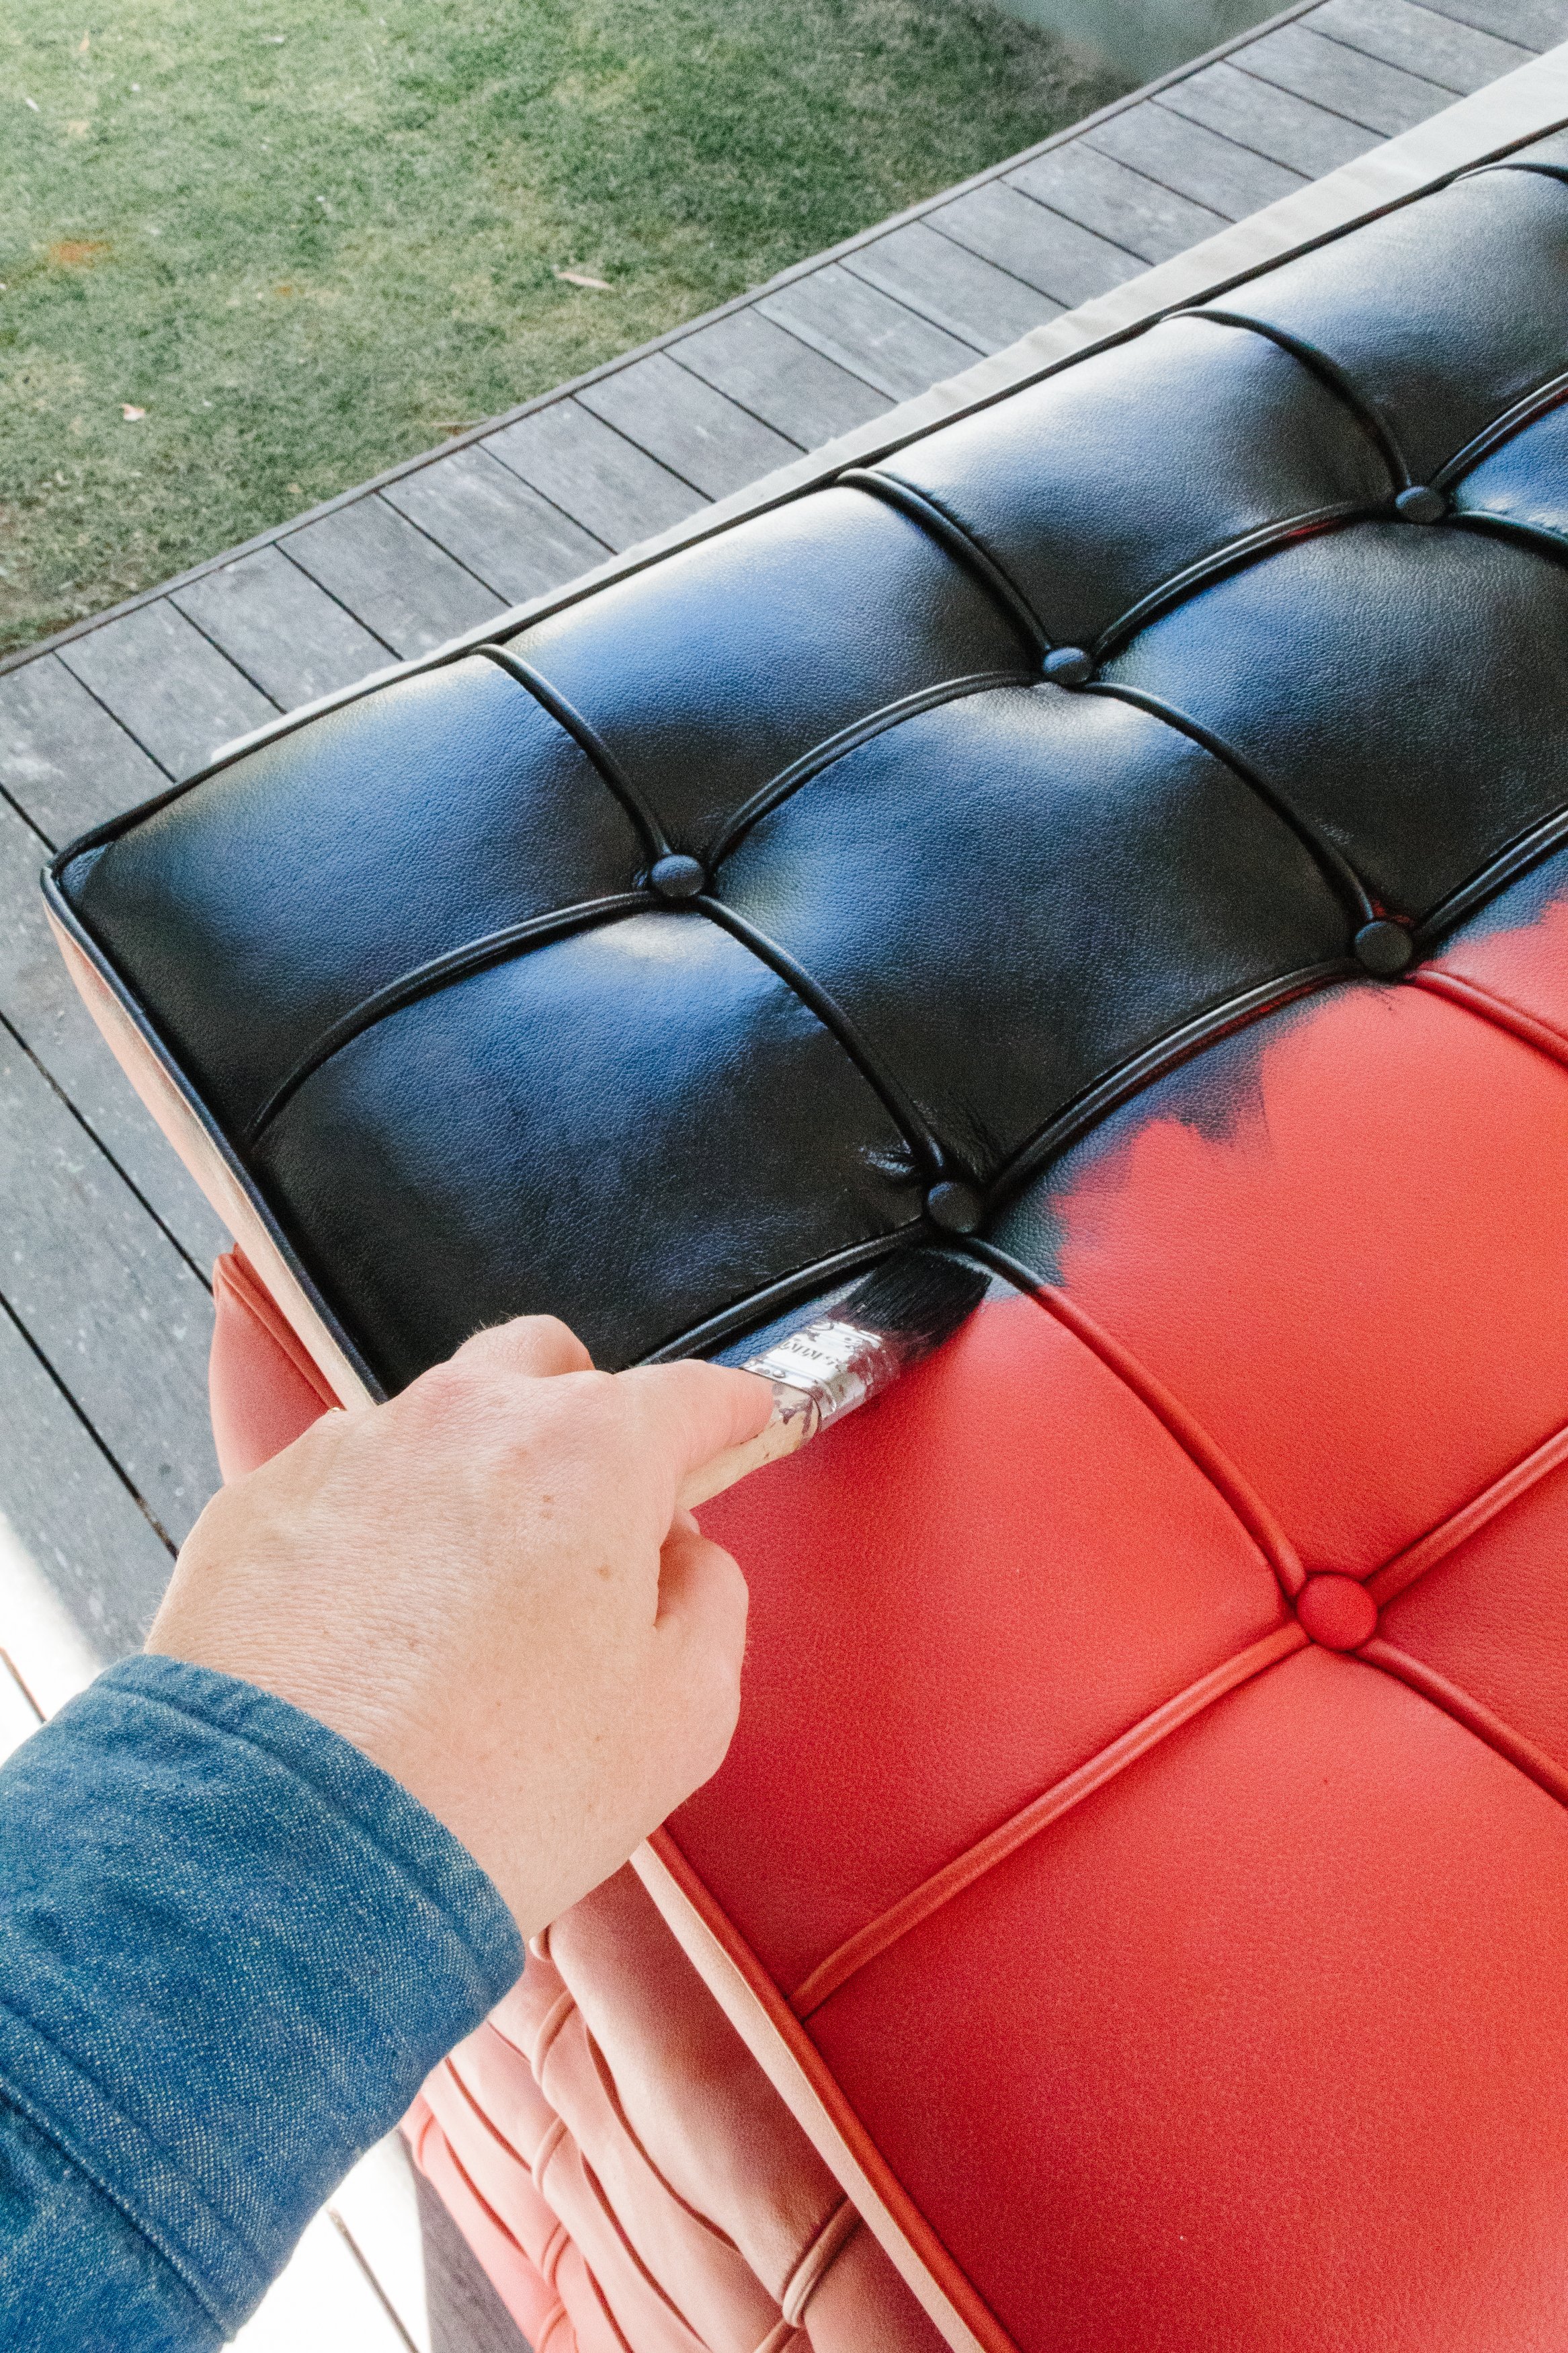 Chrome Leather Chair Restoration (6 of 54).jpg